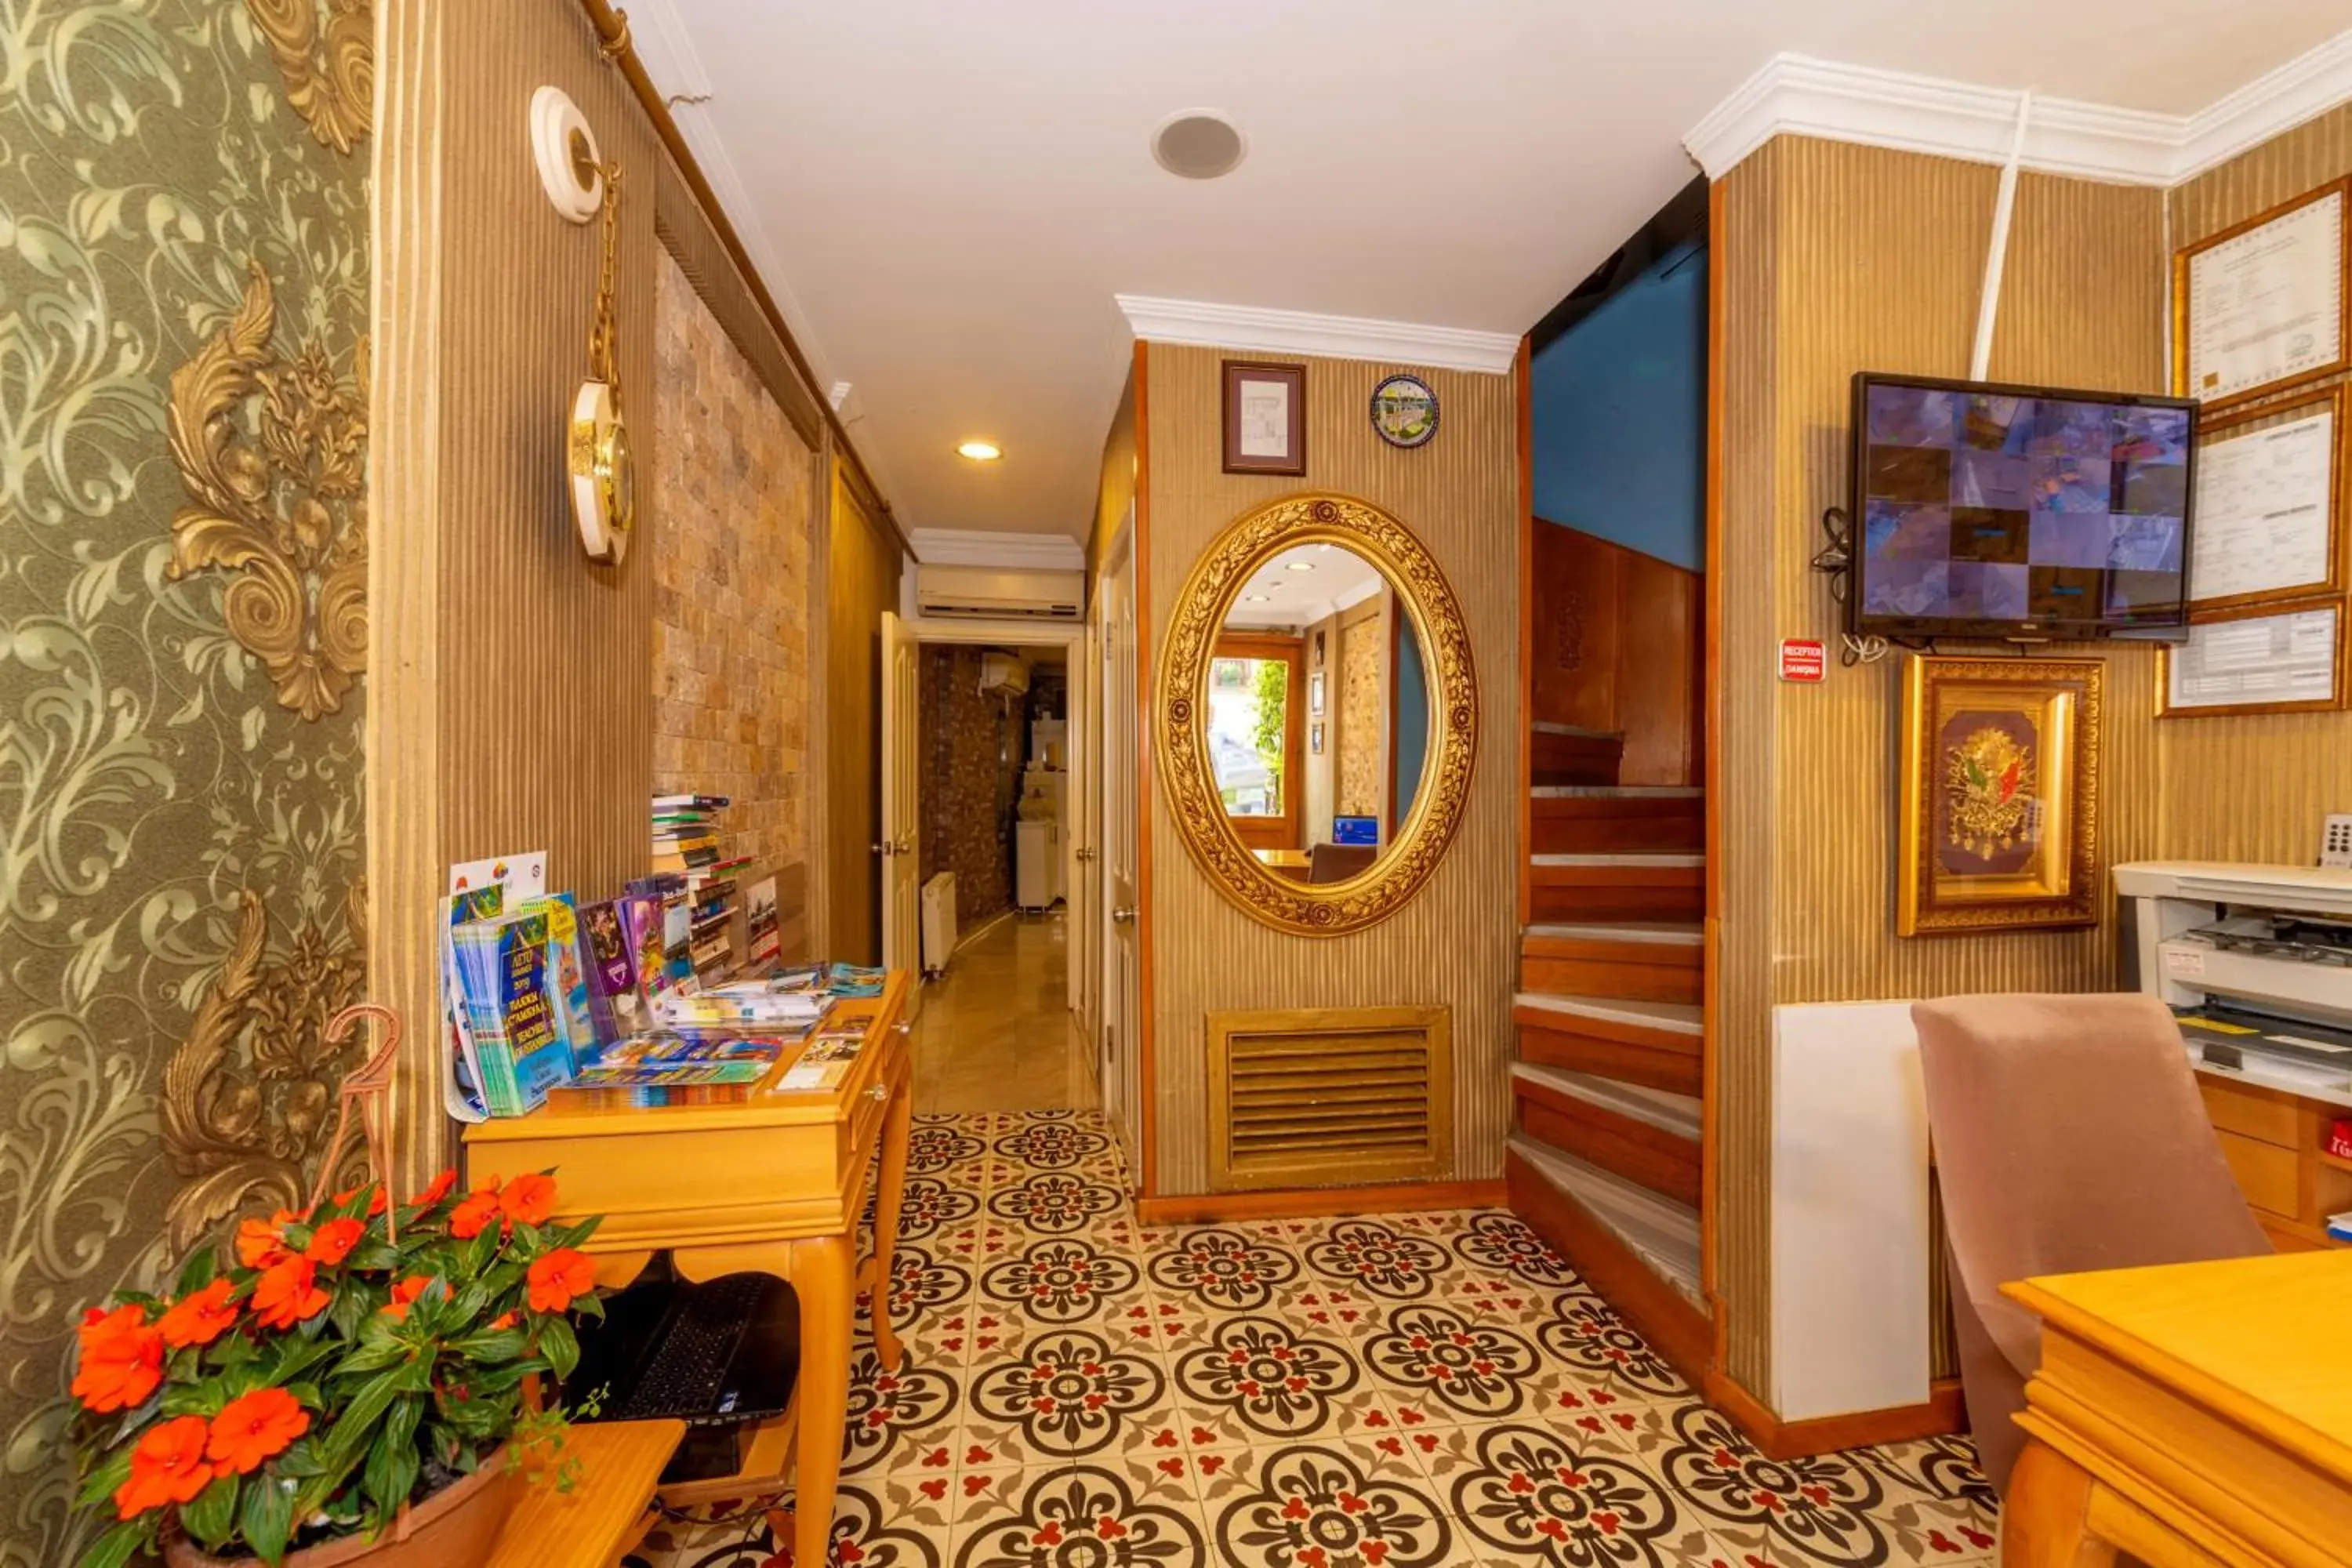 Lobby or reception in Walnut Shell Hotel Sultanahmet